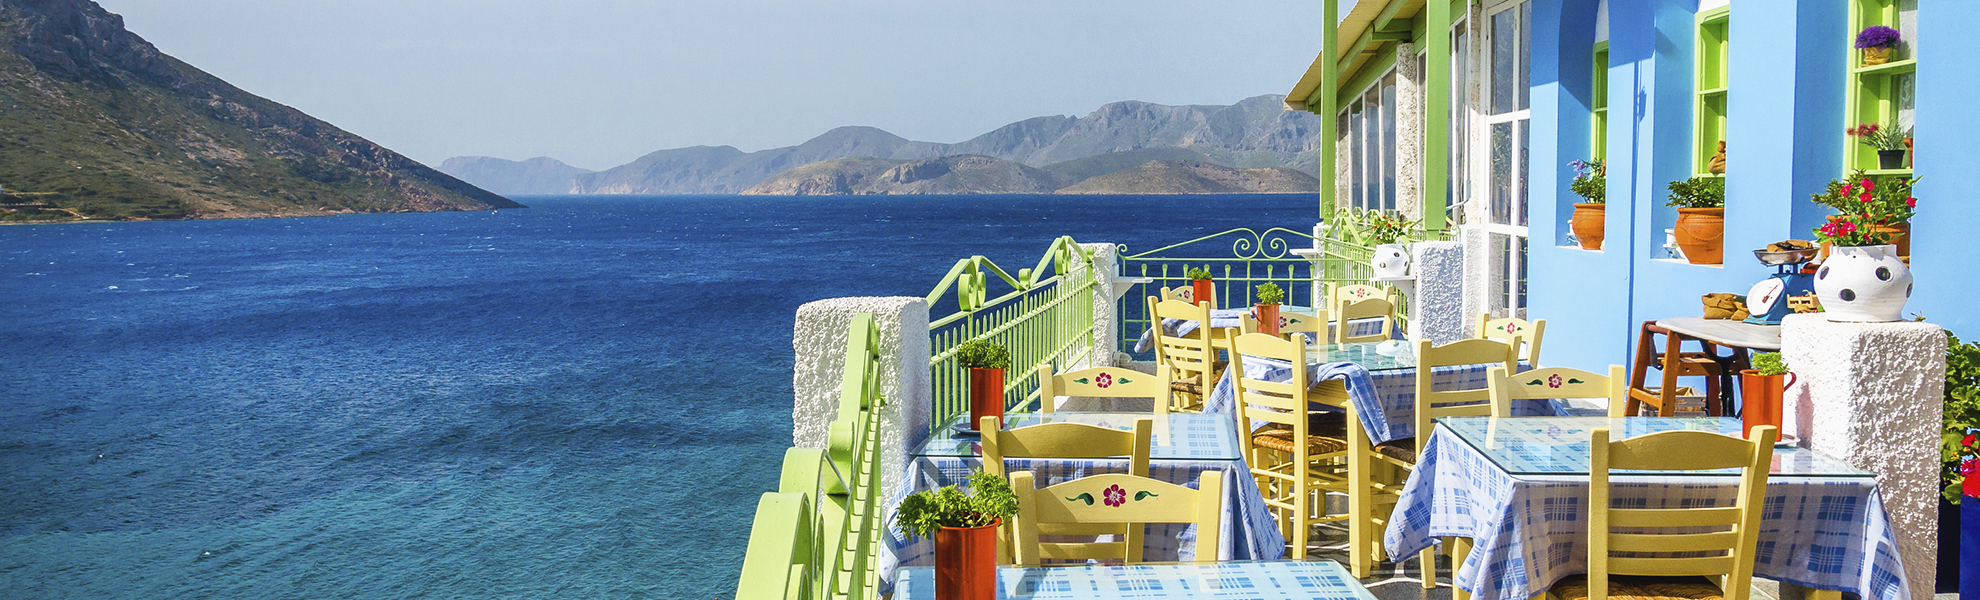 Typical Greek restaurant on the balcony, Greece